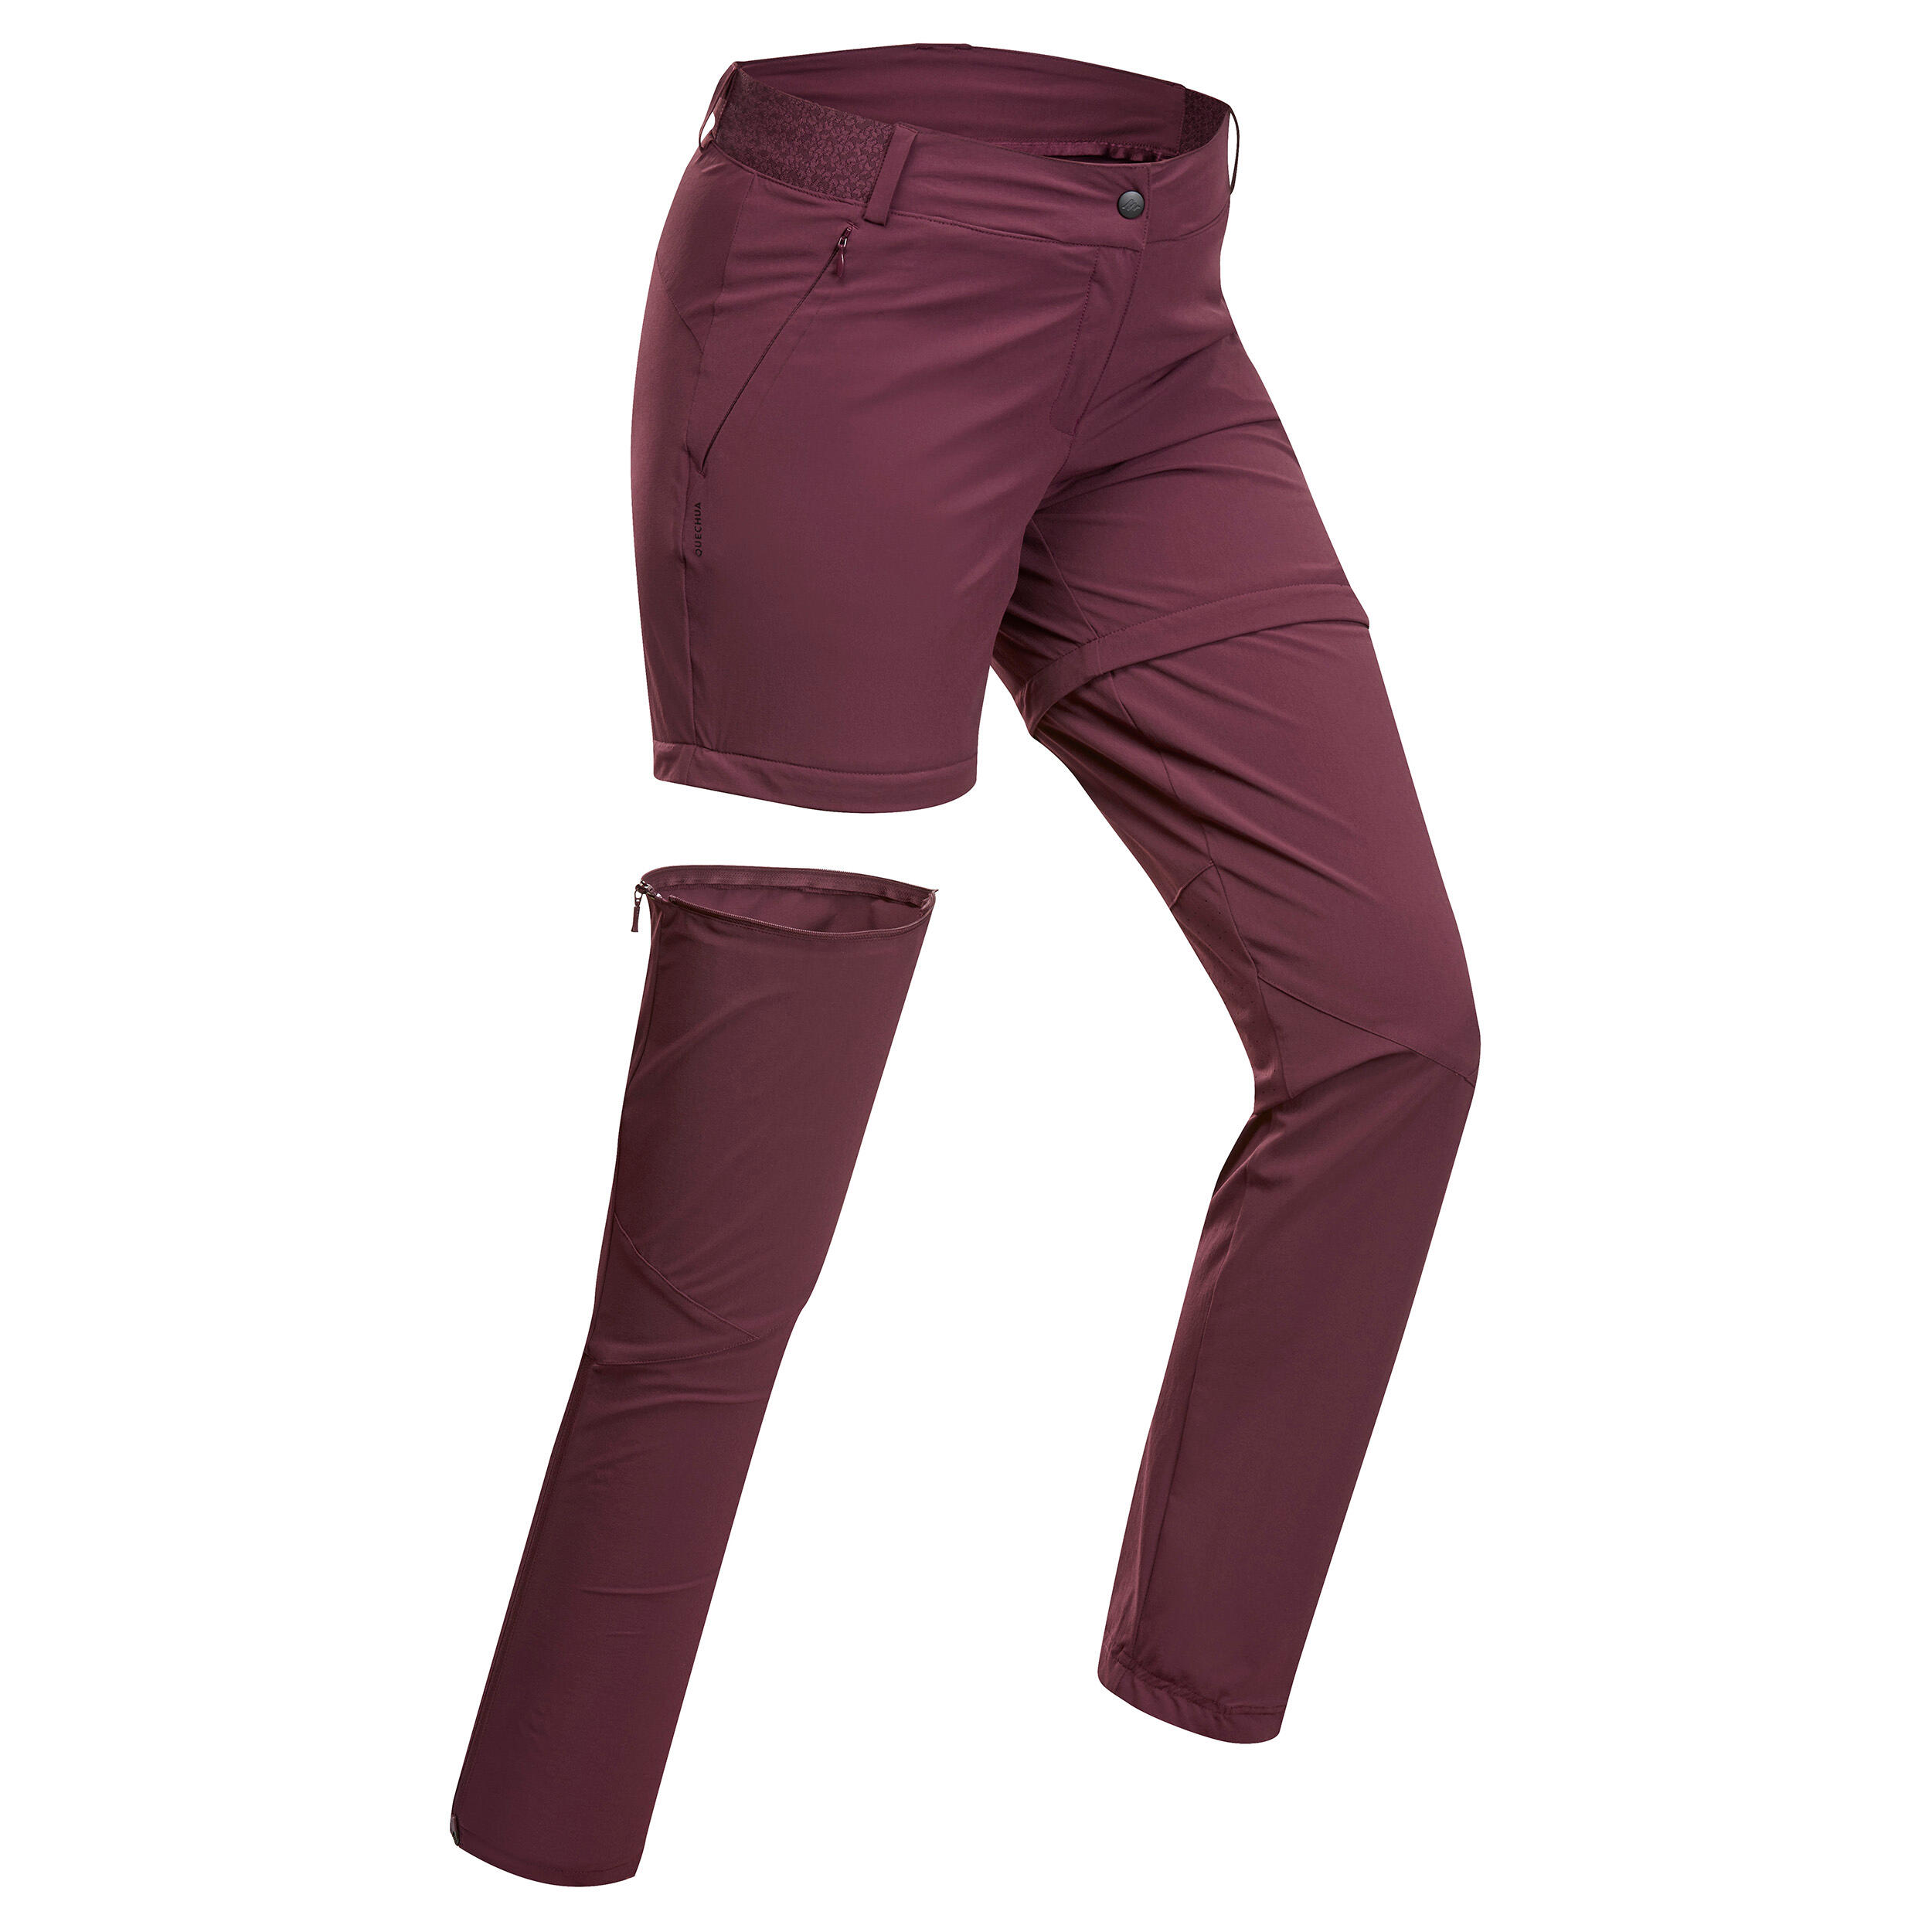 Women's convertible mountain hiking trousers - MH550 3/4